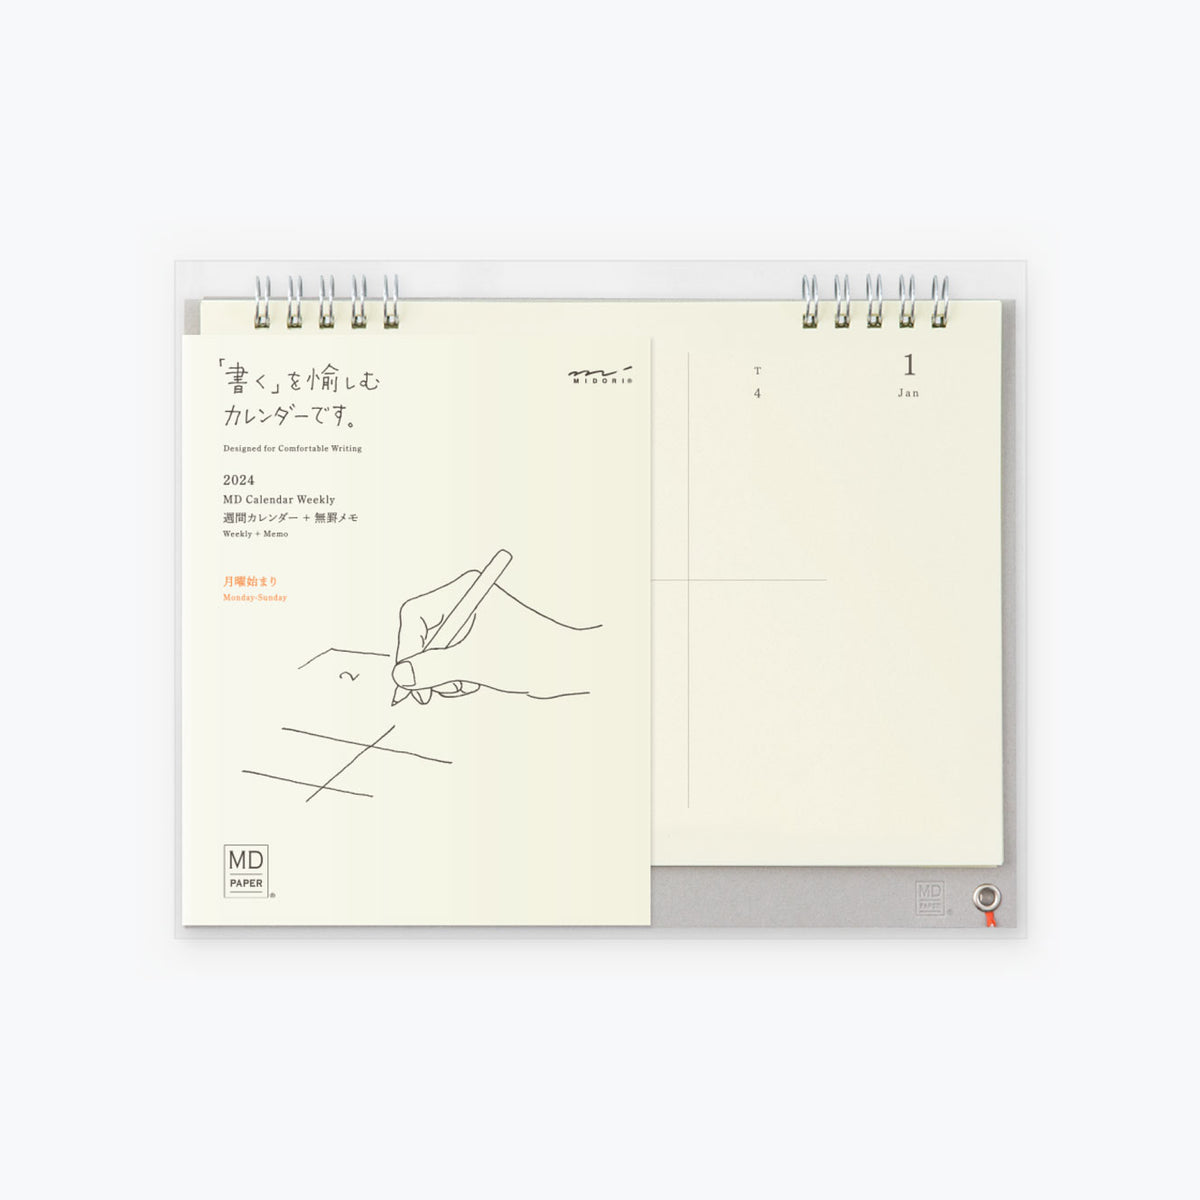 Midori - 2025 Calendar - MD Single - Weekly